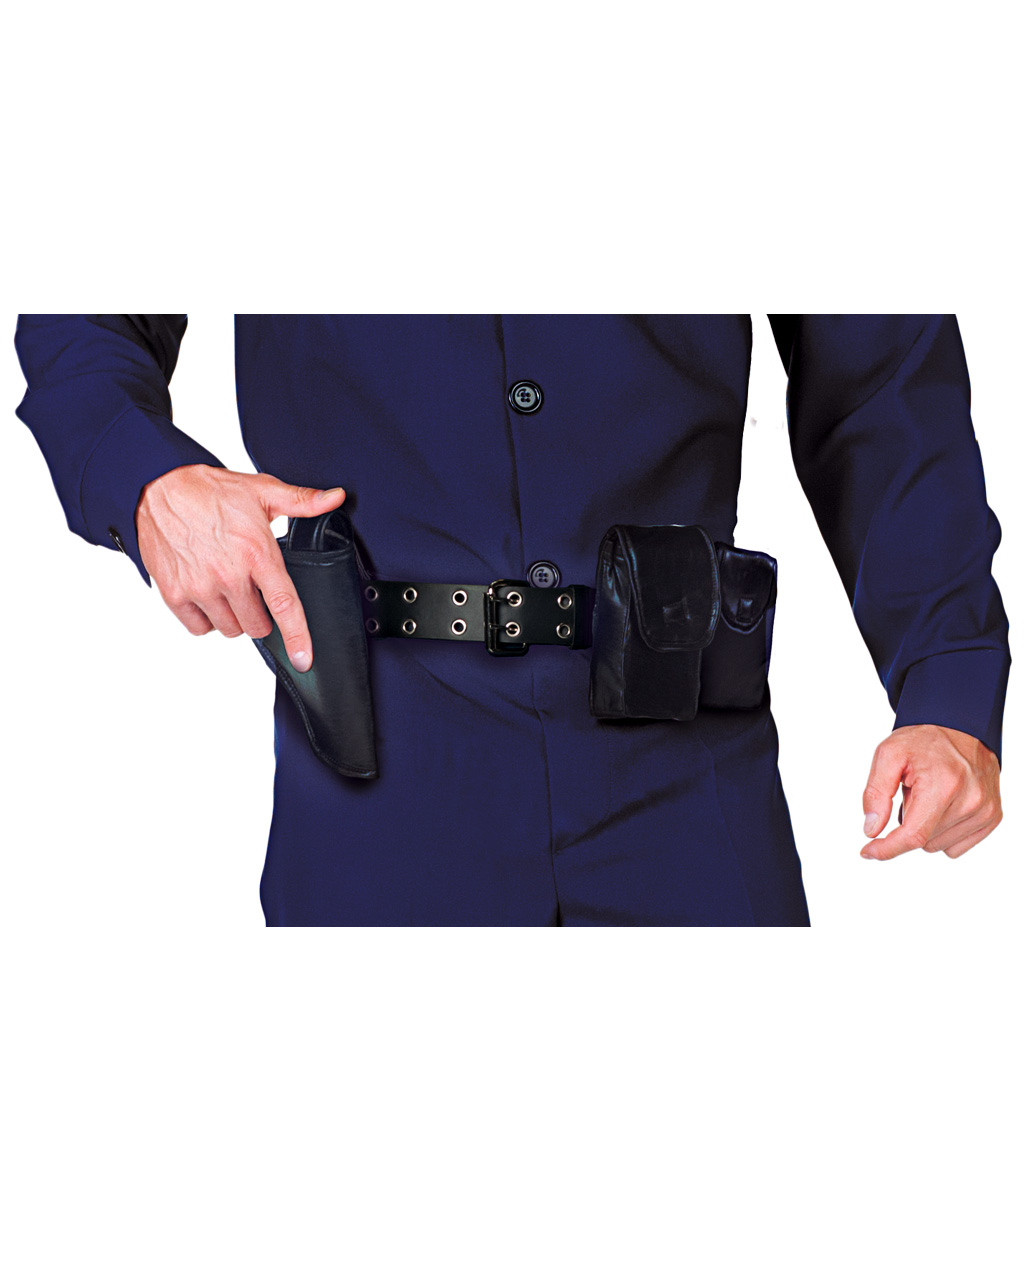 https://inst-2.cdn.shockers.de/hs_cdn/out/pictures/master/product/1/polizei-guertel-kostuem-zubehoer-pistolenholster-polizeiverkleidung-police-belt-31501.jpg